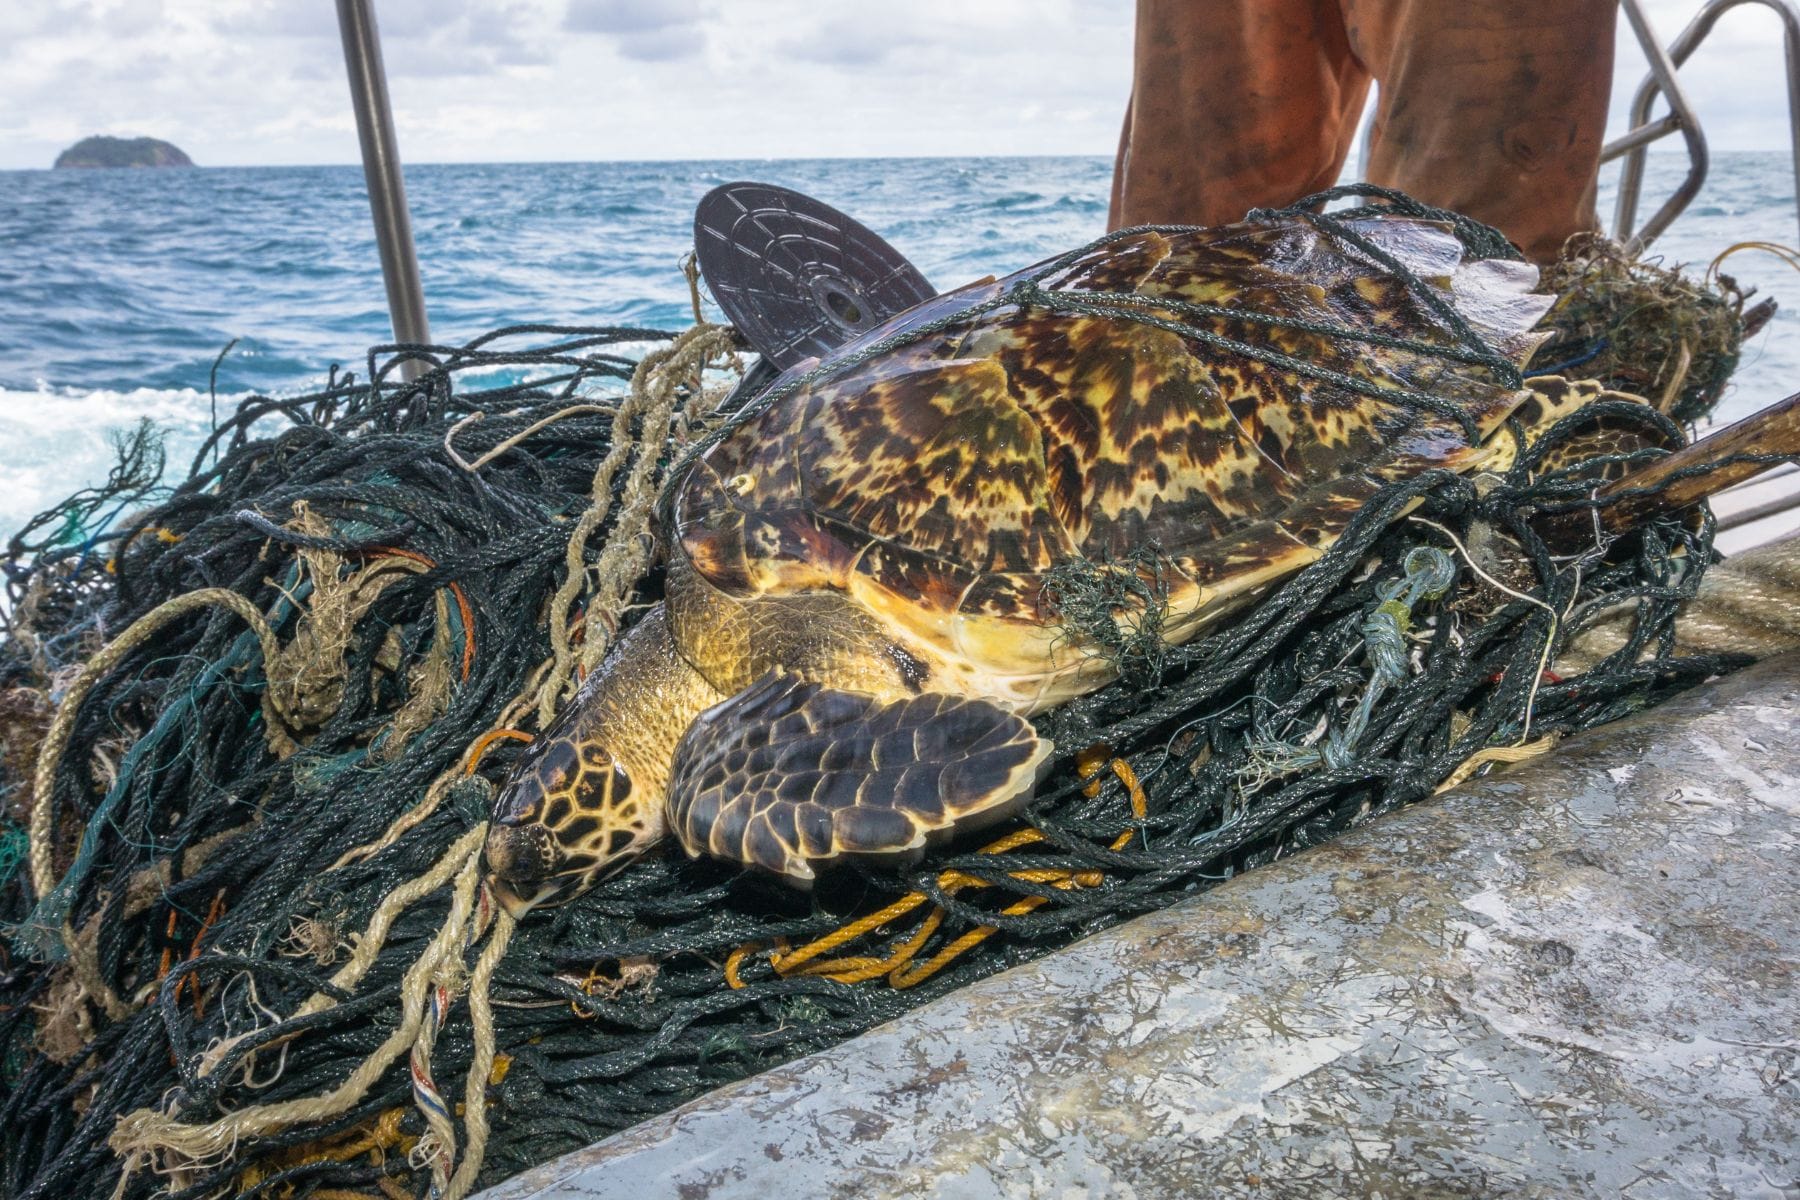 Turtle caught in fishing net.